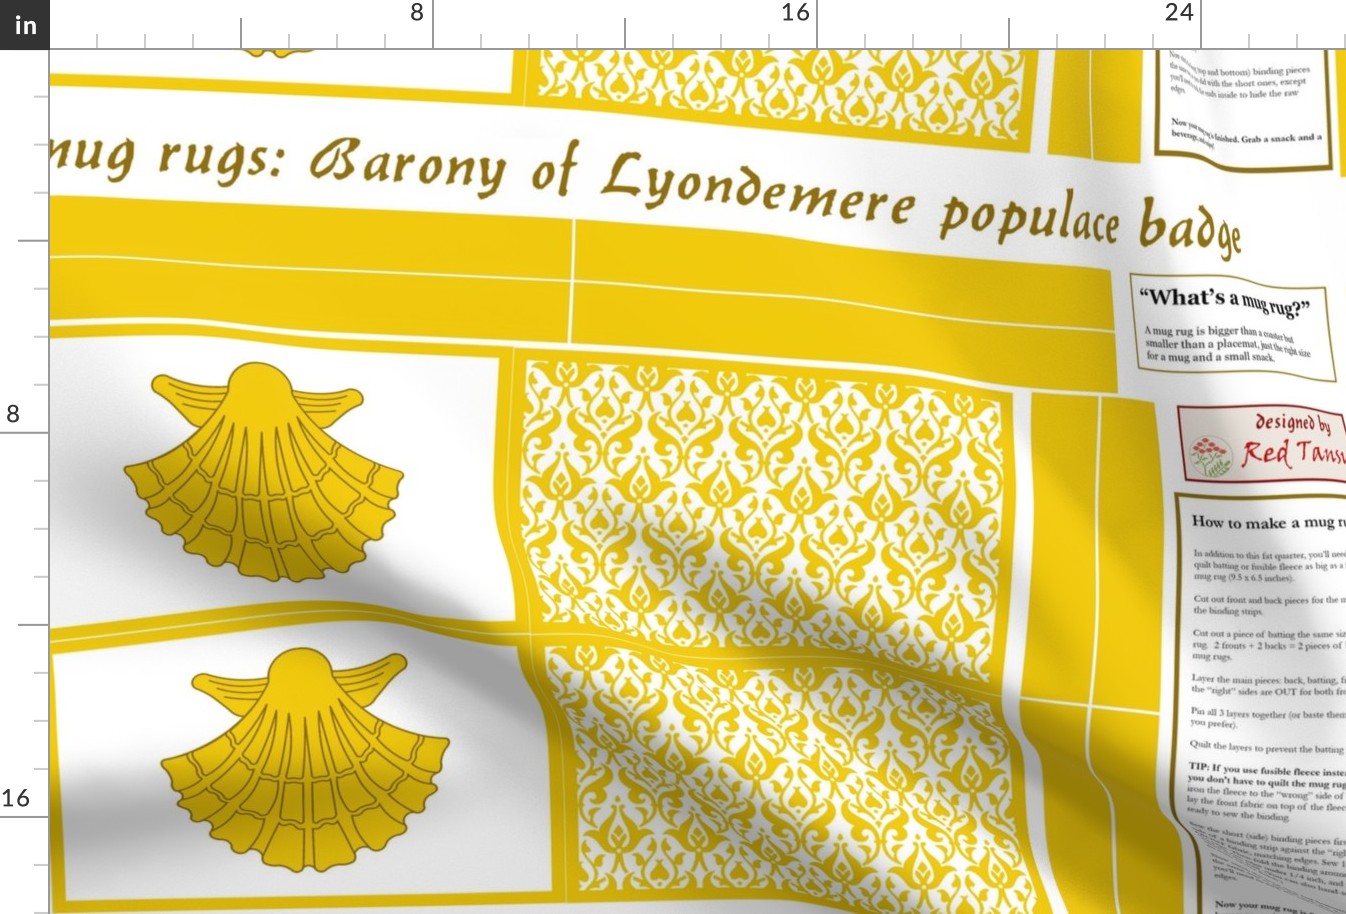 mug rugs: Barony of Lyondemere (SCA)